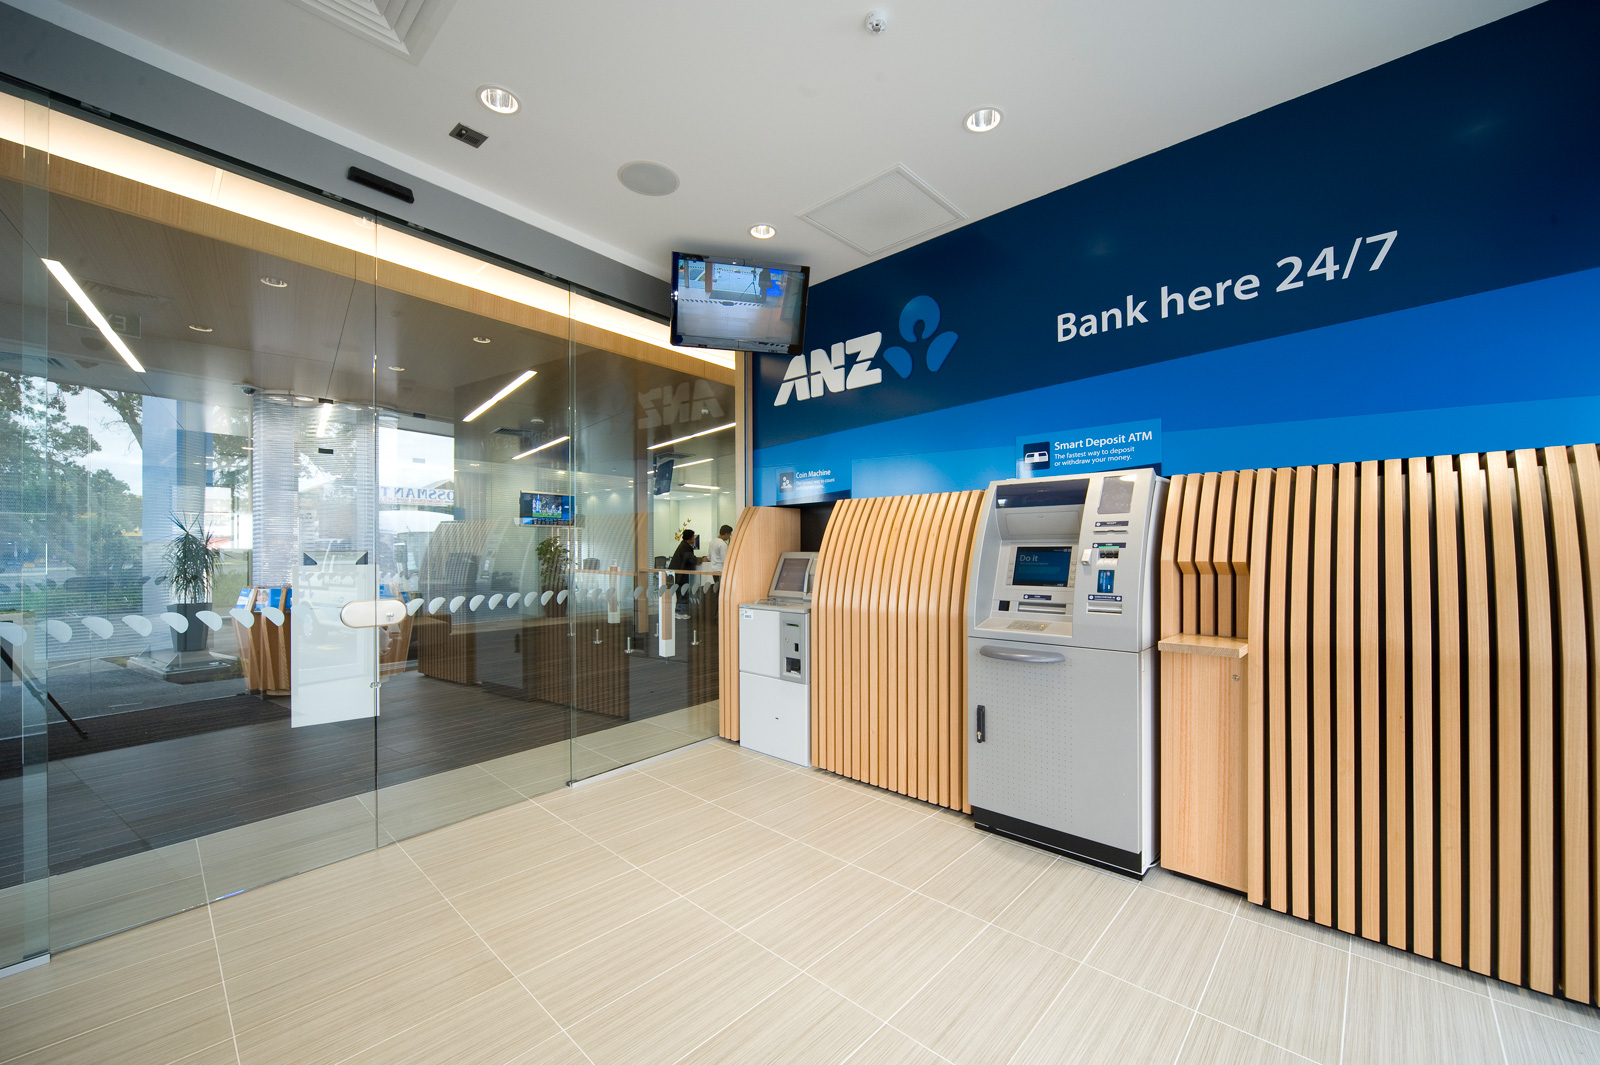 Бэнк оф сайт. Интерьер банка. ANZ банк. ANZ Bank офис. Банк фон внутри.